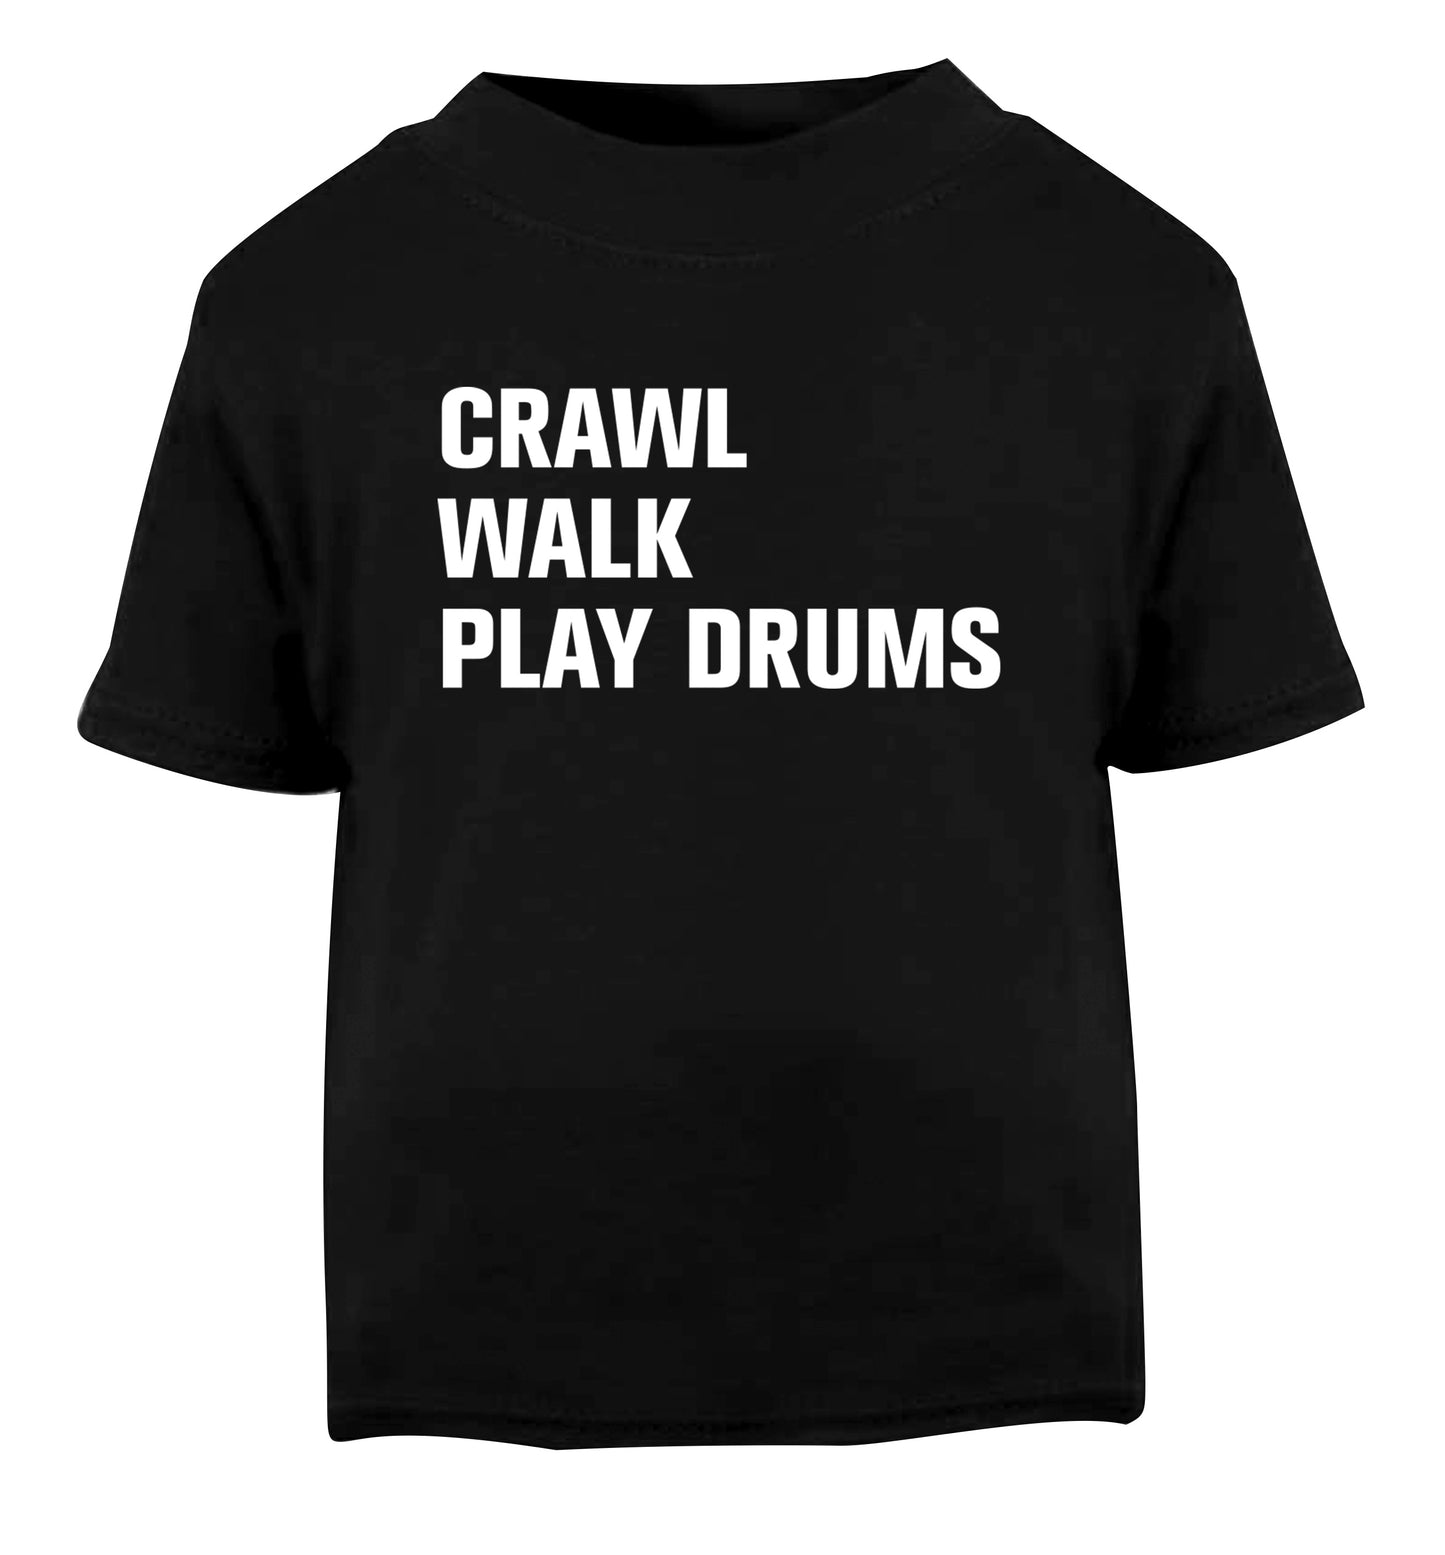 Crawl walk play drums Black Baby Toddler Tshirt 2 years